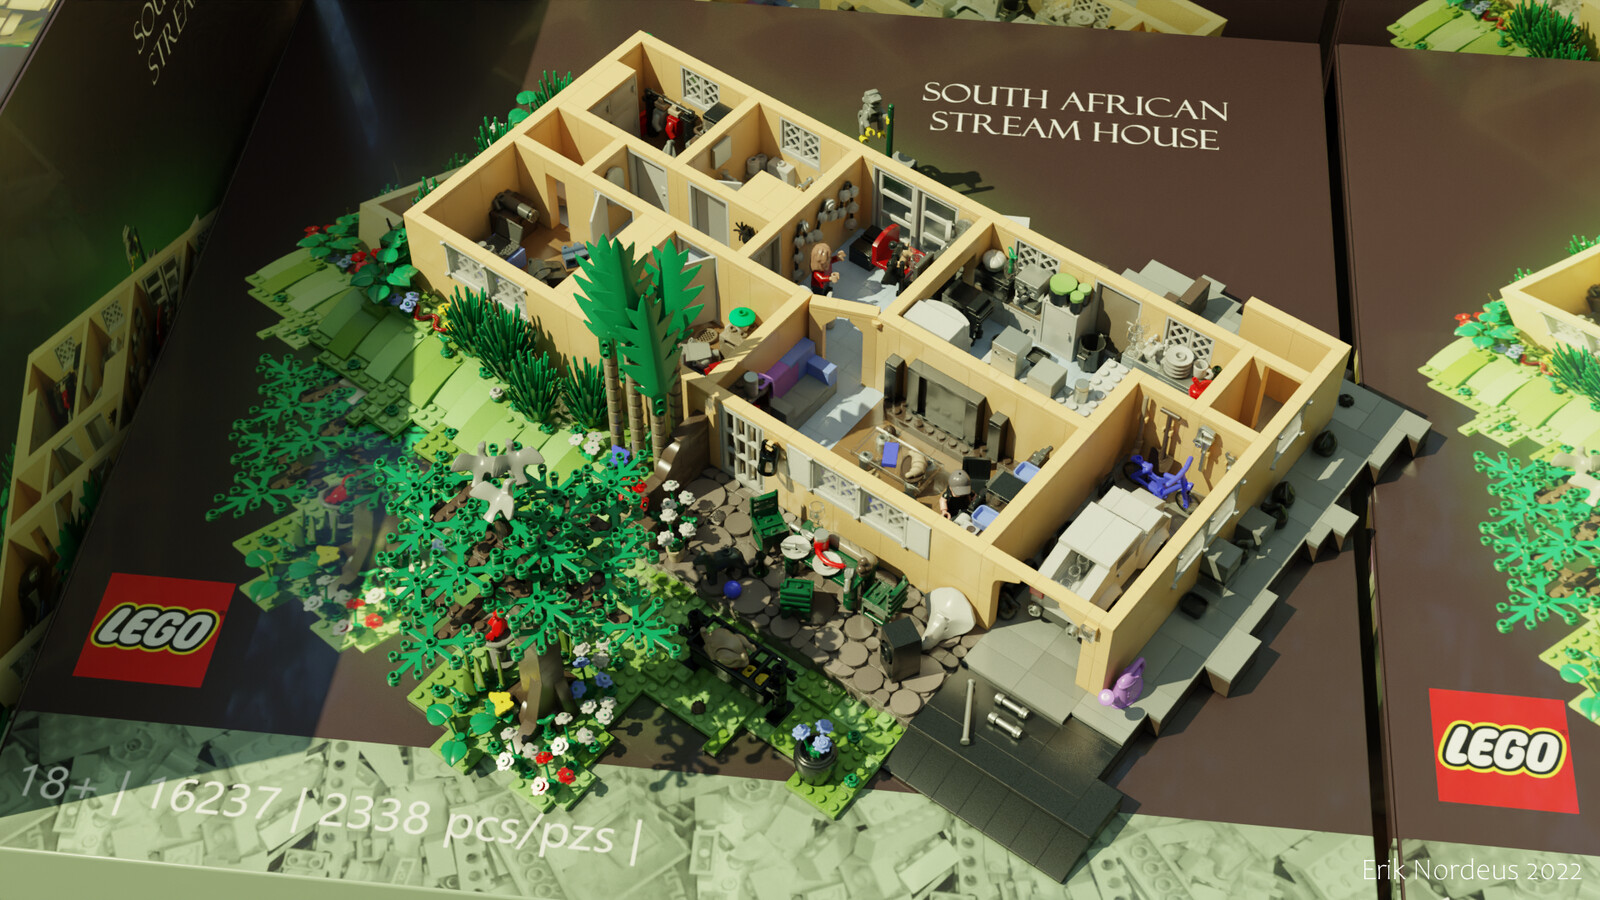 LEGO set South Africa "Stream house." The house consists of 2338 LEGO bricks.